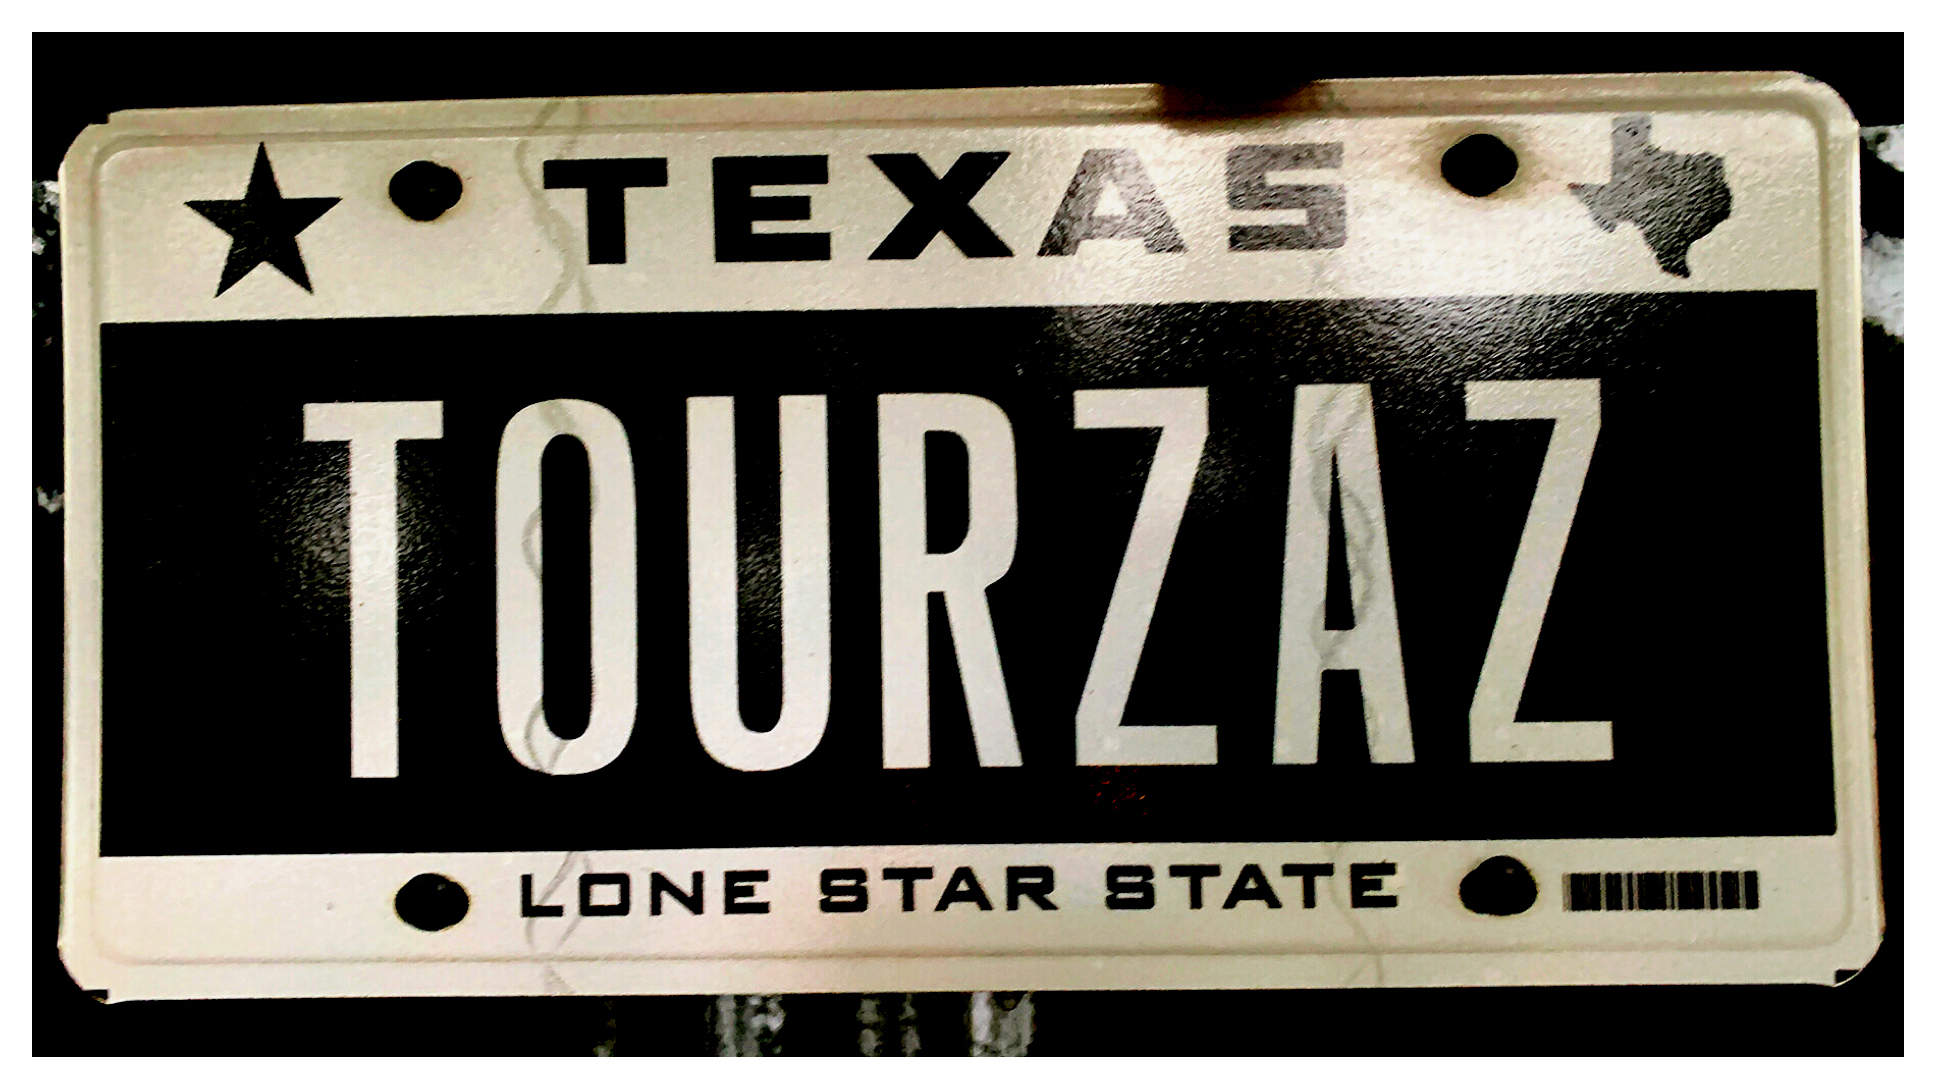 A Texas license plate that reads "TOURZAZ."